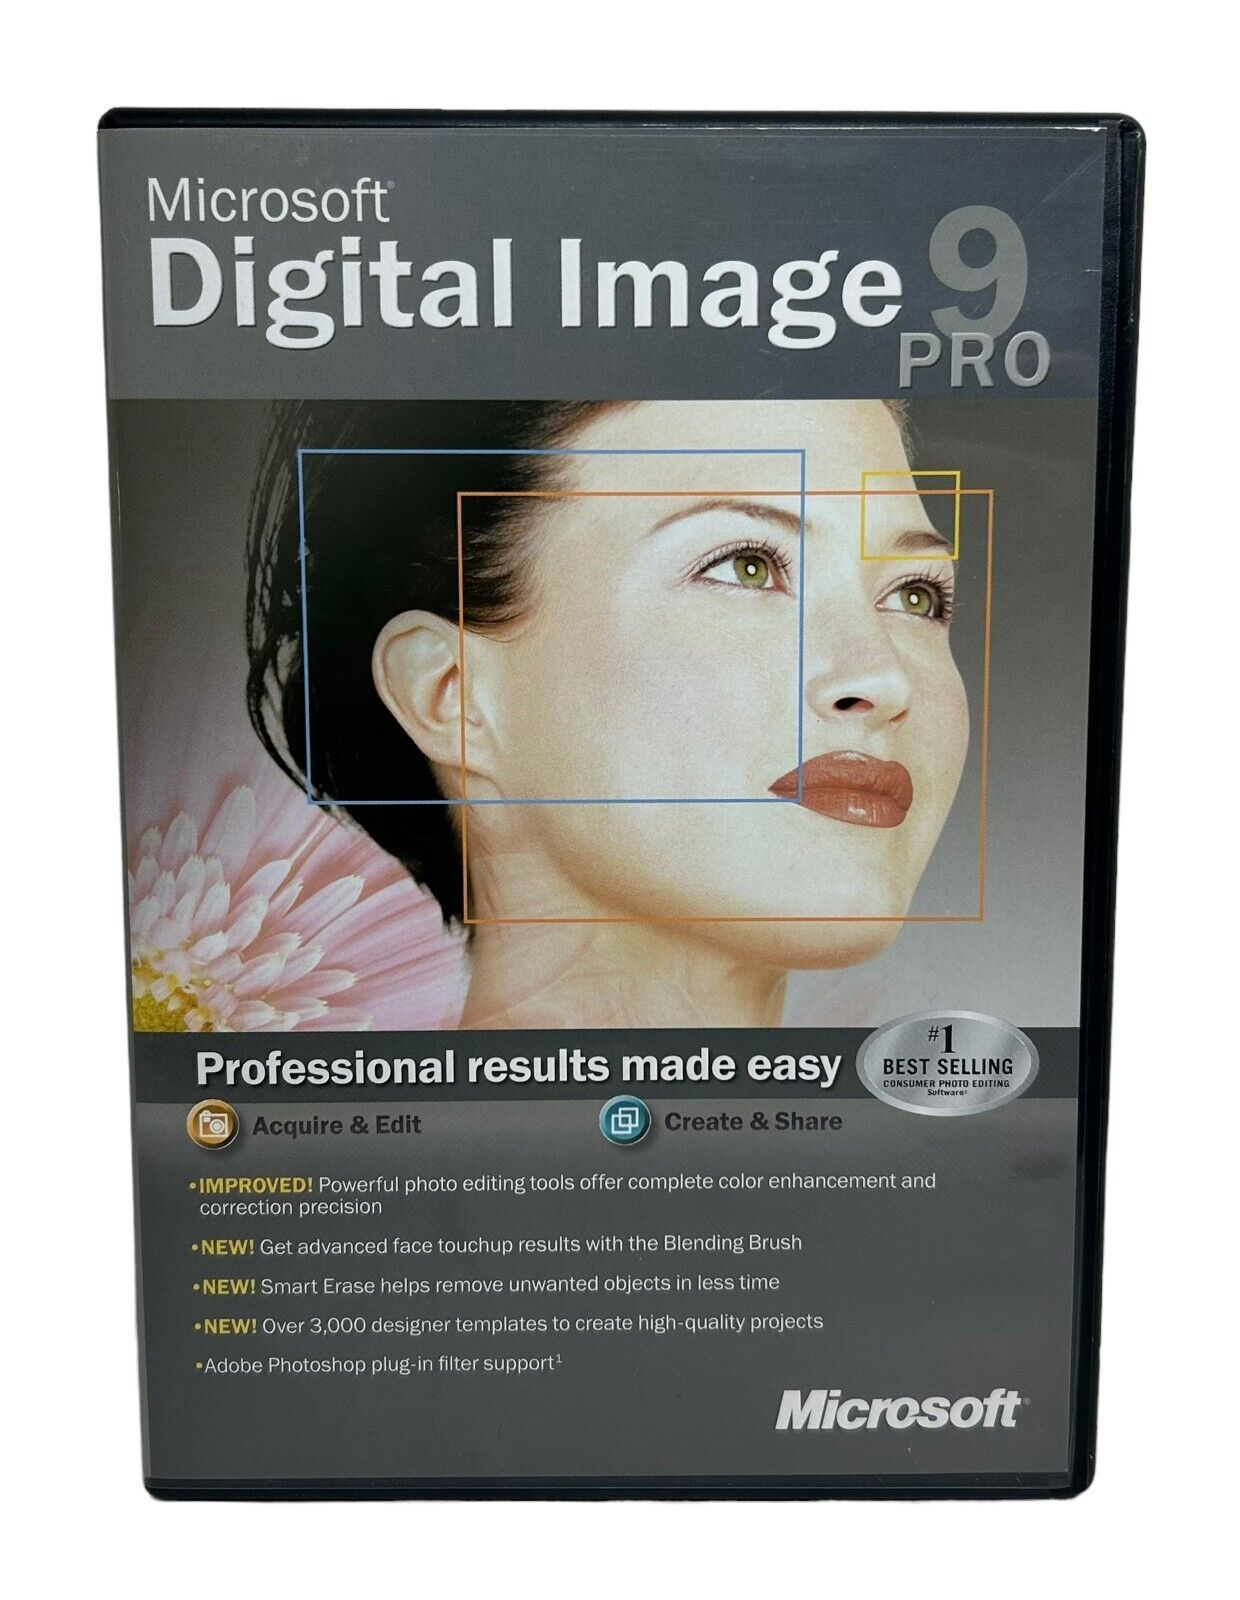 Microsoft Digital Image 9 Pro Software Photo Editing - 2 Discs